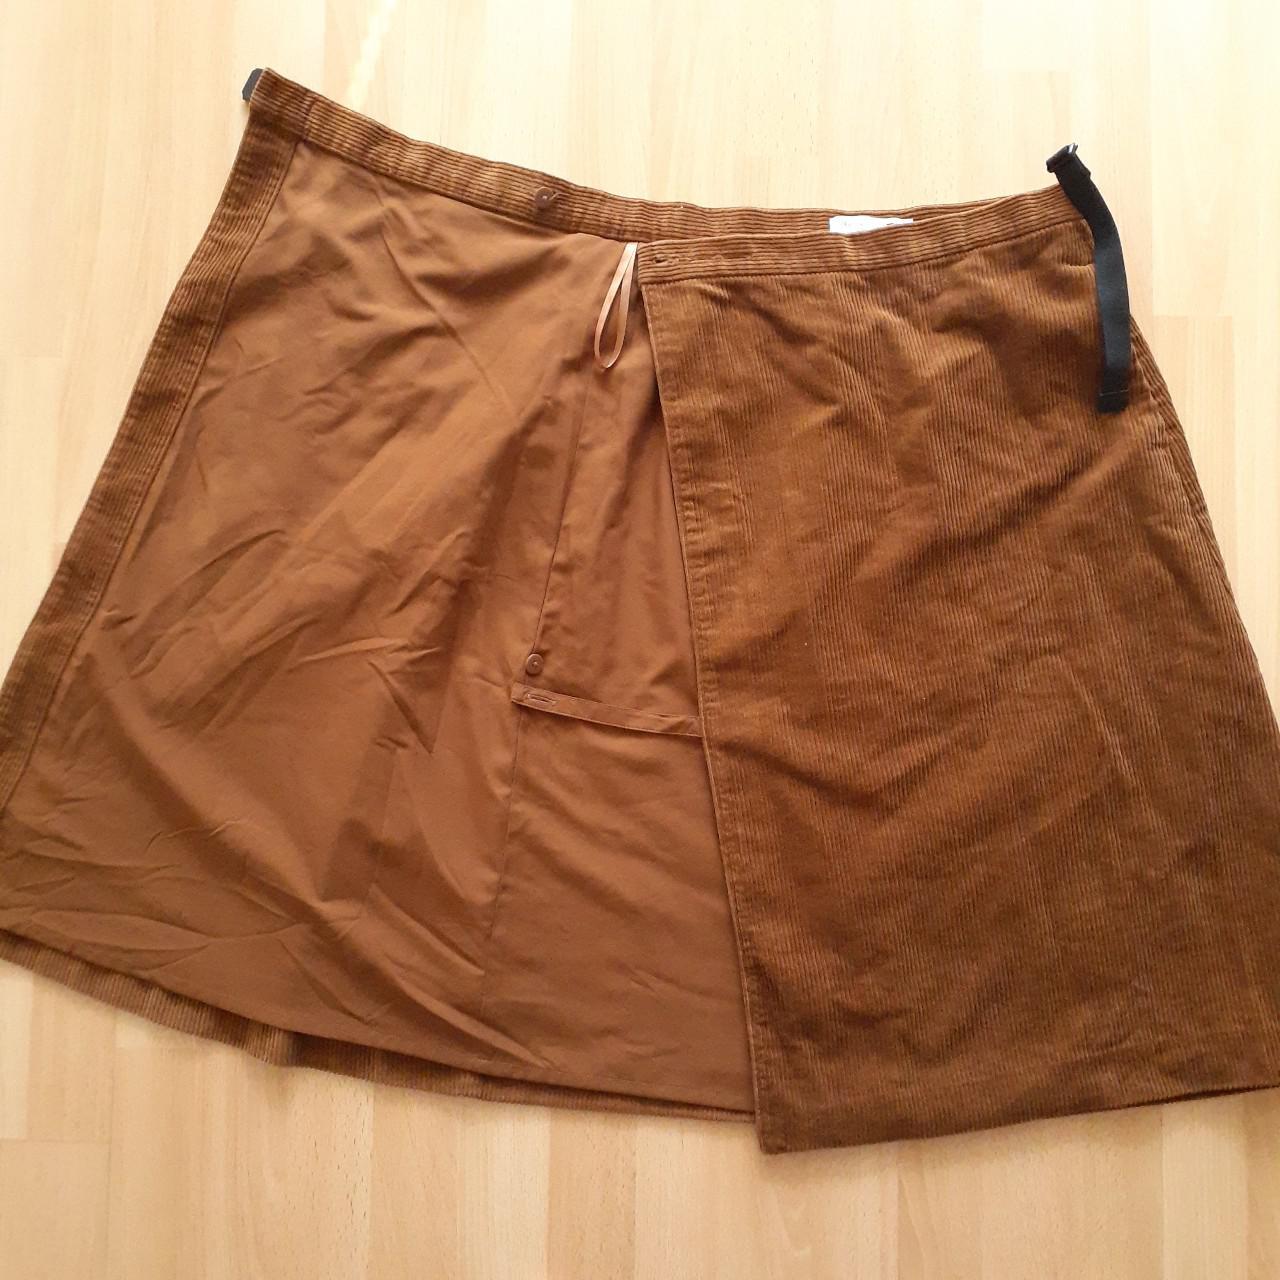 Product Image 2 - Vintage medium brown corduroy skirt